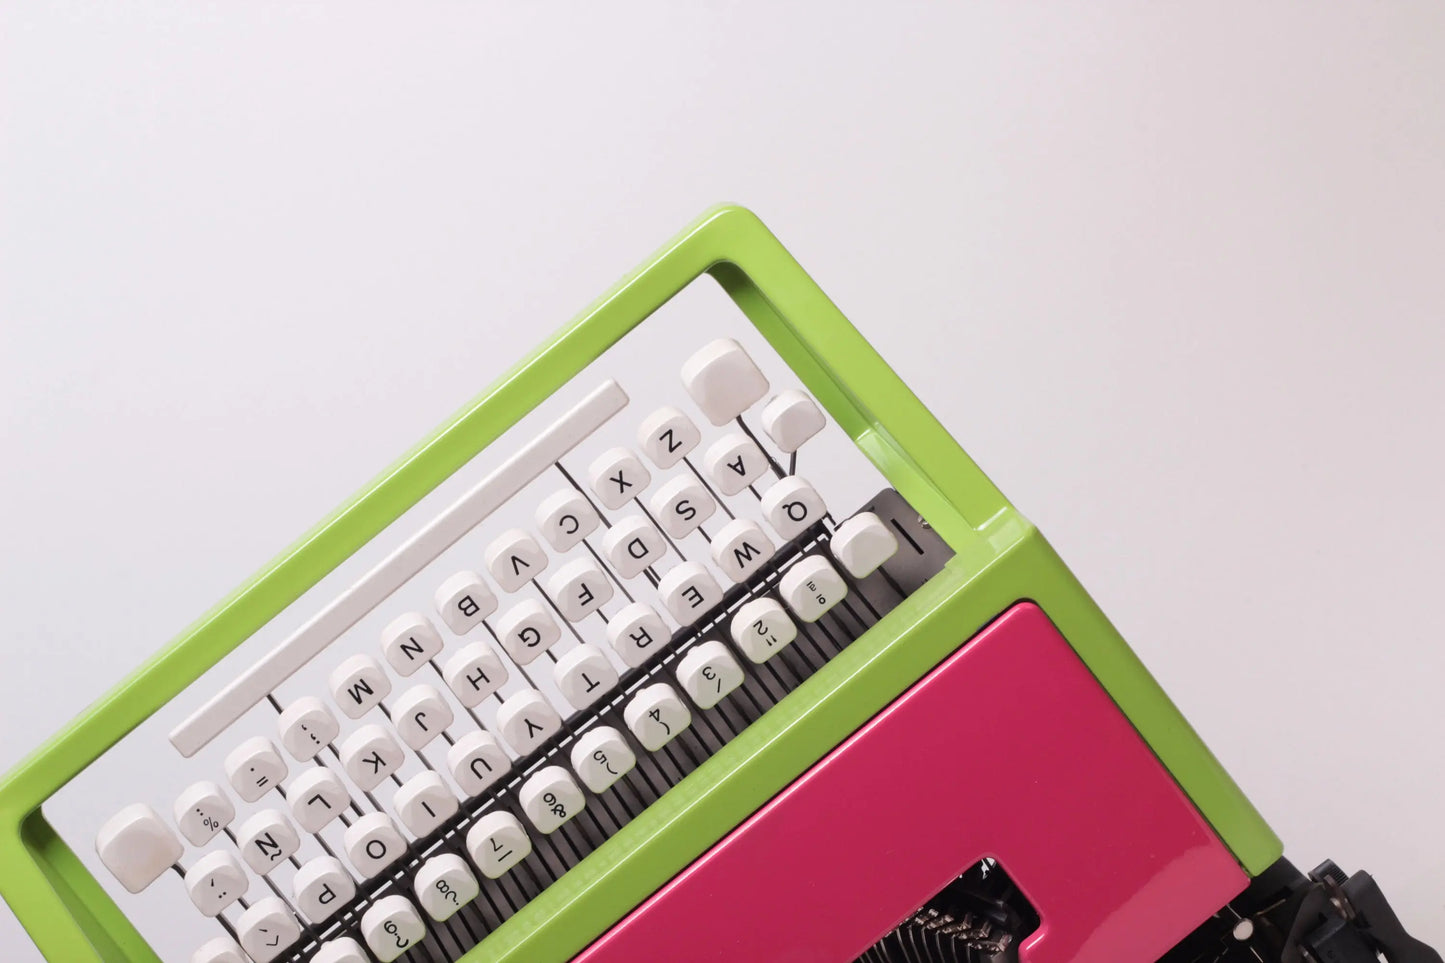 SALE! - Olivetti Dora/Lettera 31 Green & Pink Typewriter, Vintage, Mint Condition, Professionally Serviced - ElGranero Typewriter.Company